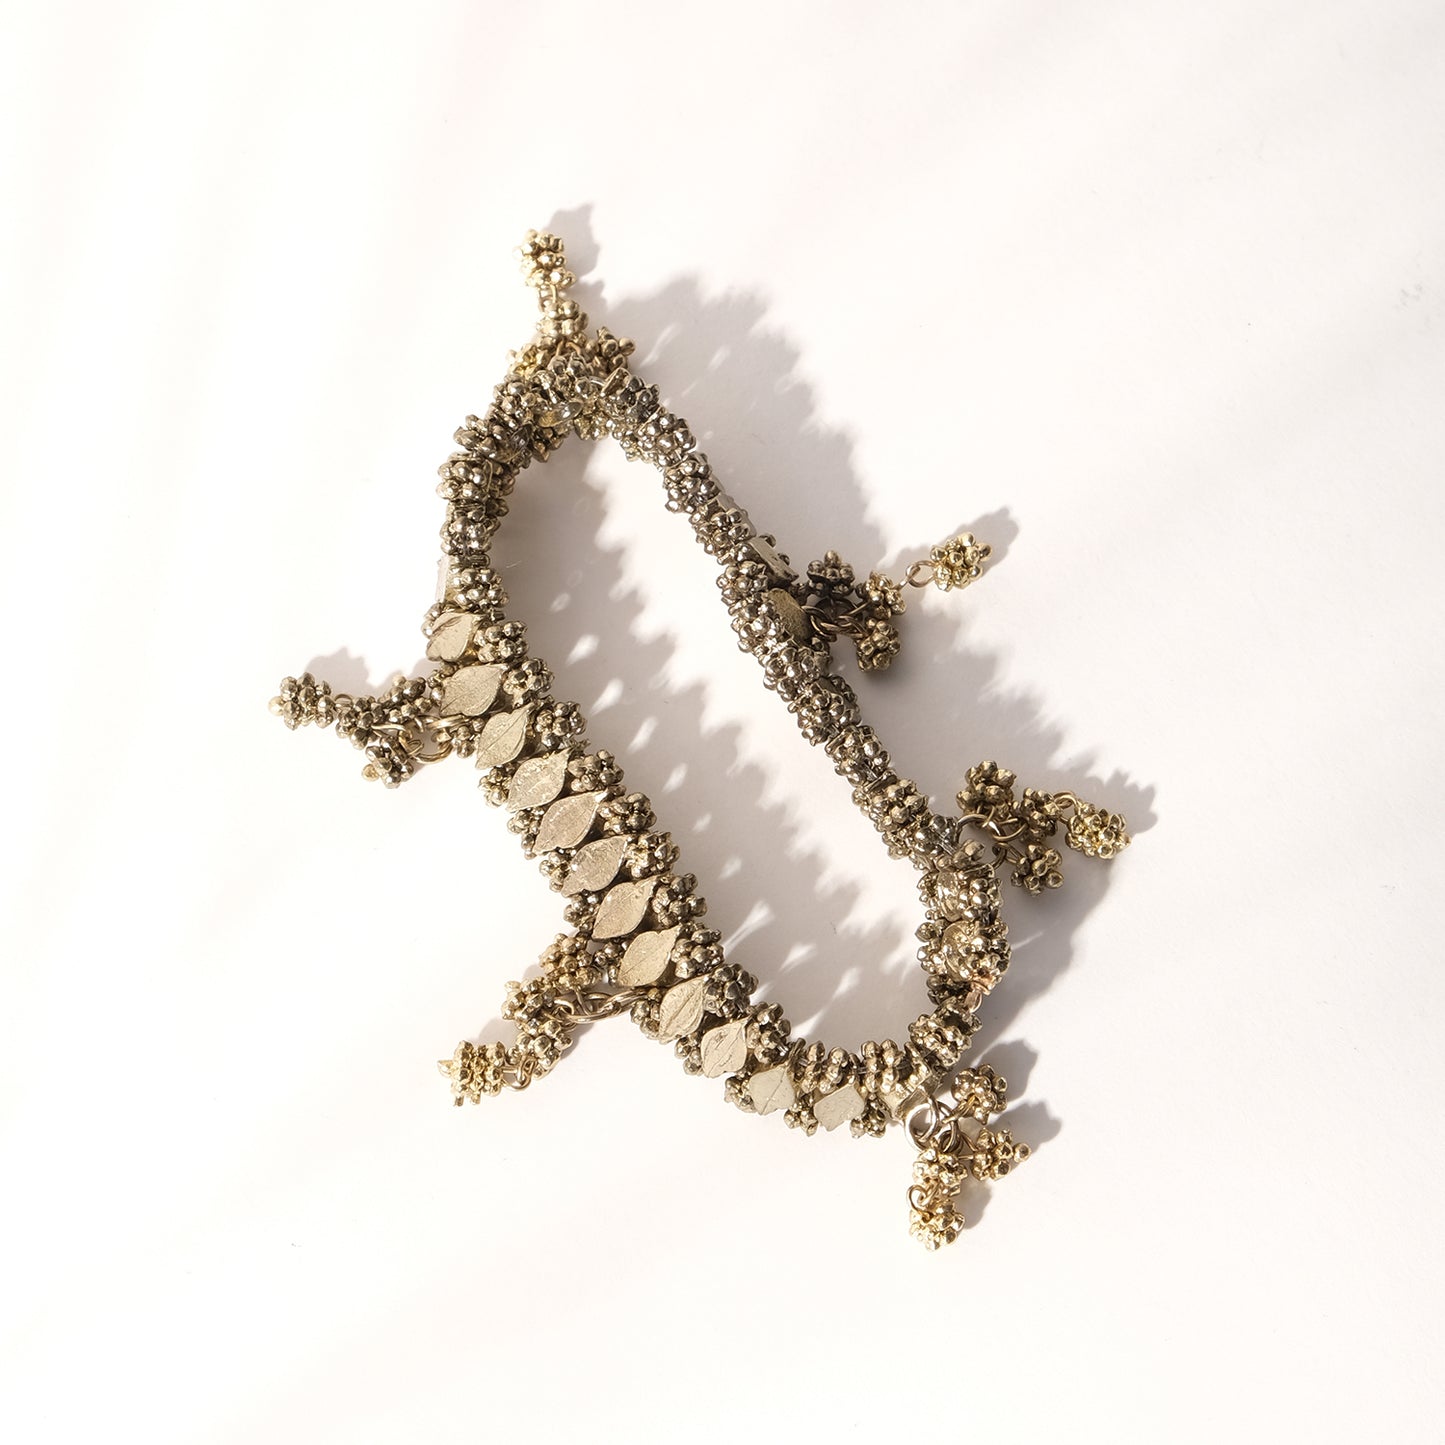 Antique Floral Beads Bracelet